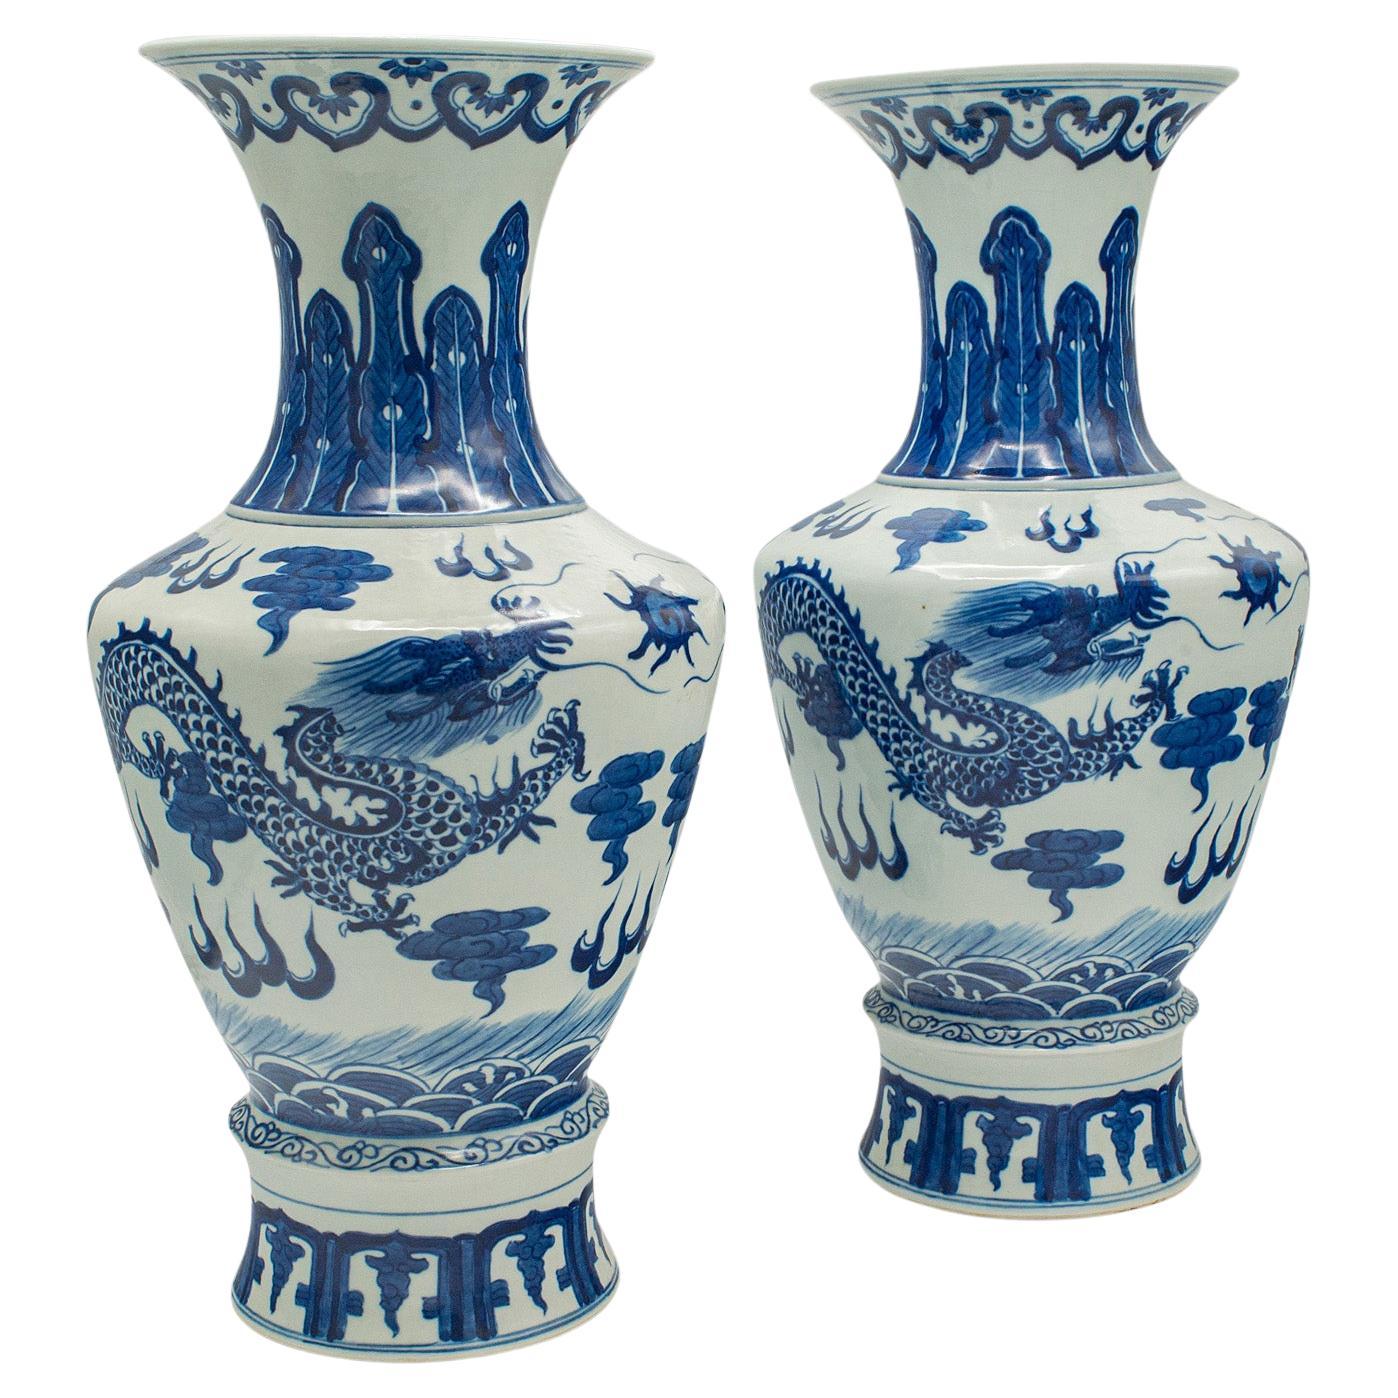 Pair of Vintage Baluster Vases, Chinese, Ceramic, Decor, Display Urn, Art Deco